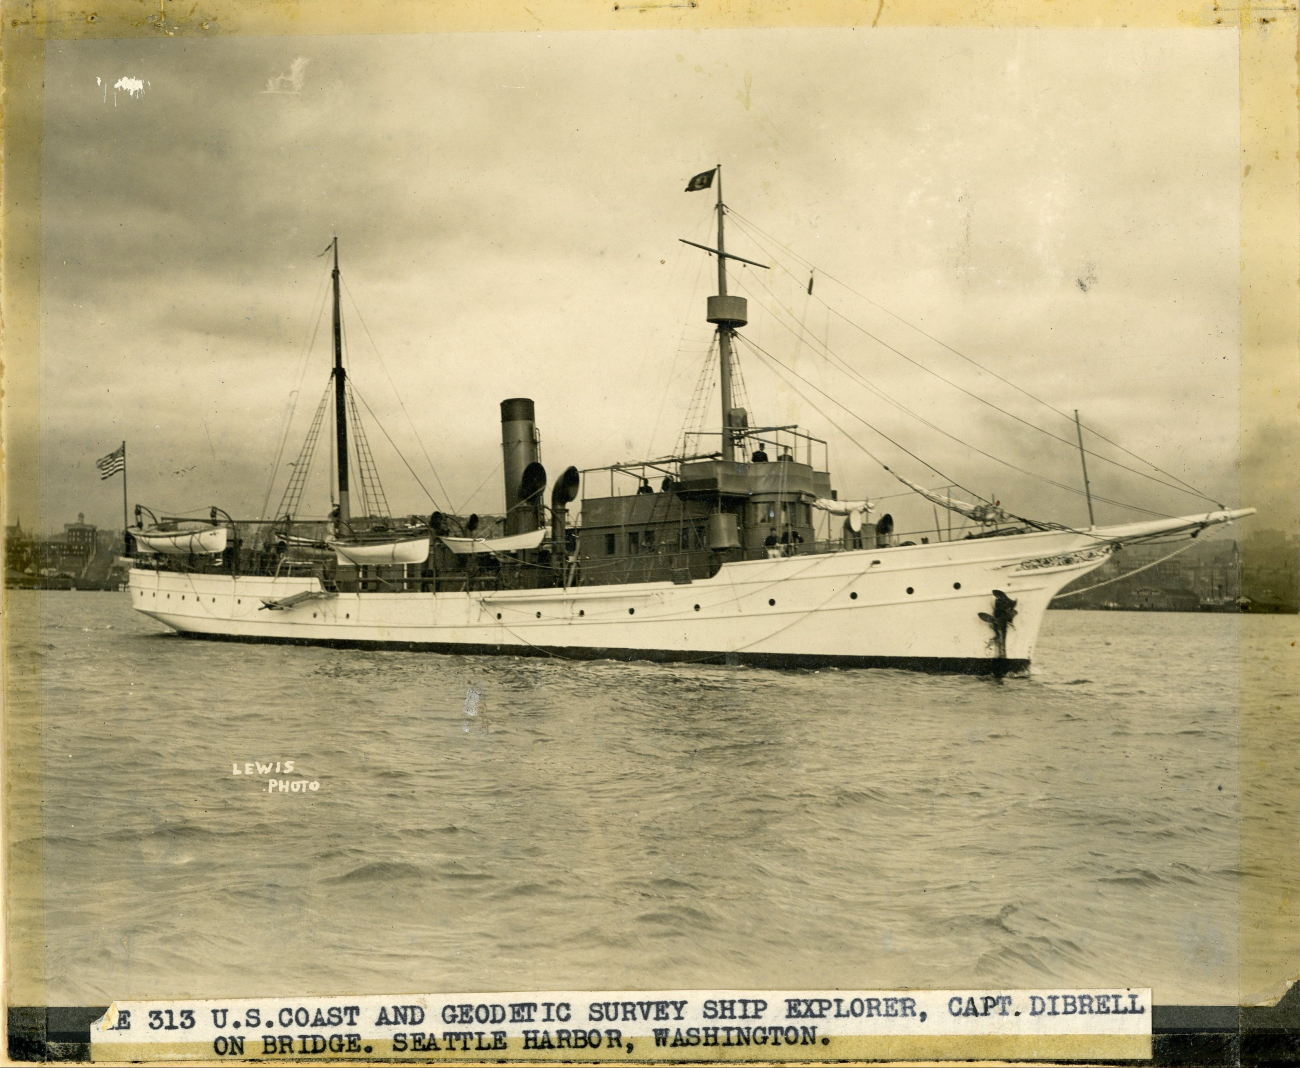 The first USC&GS; Ship EXPLORER